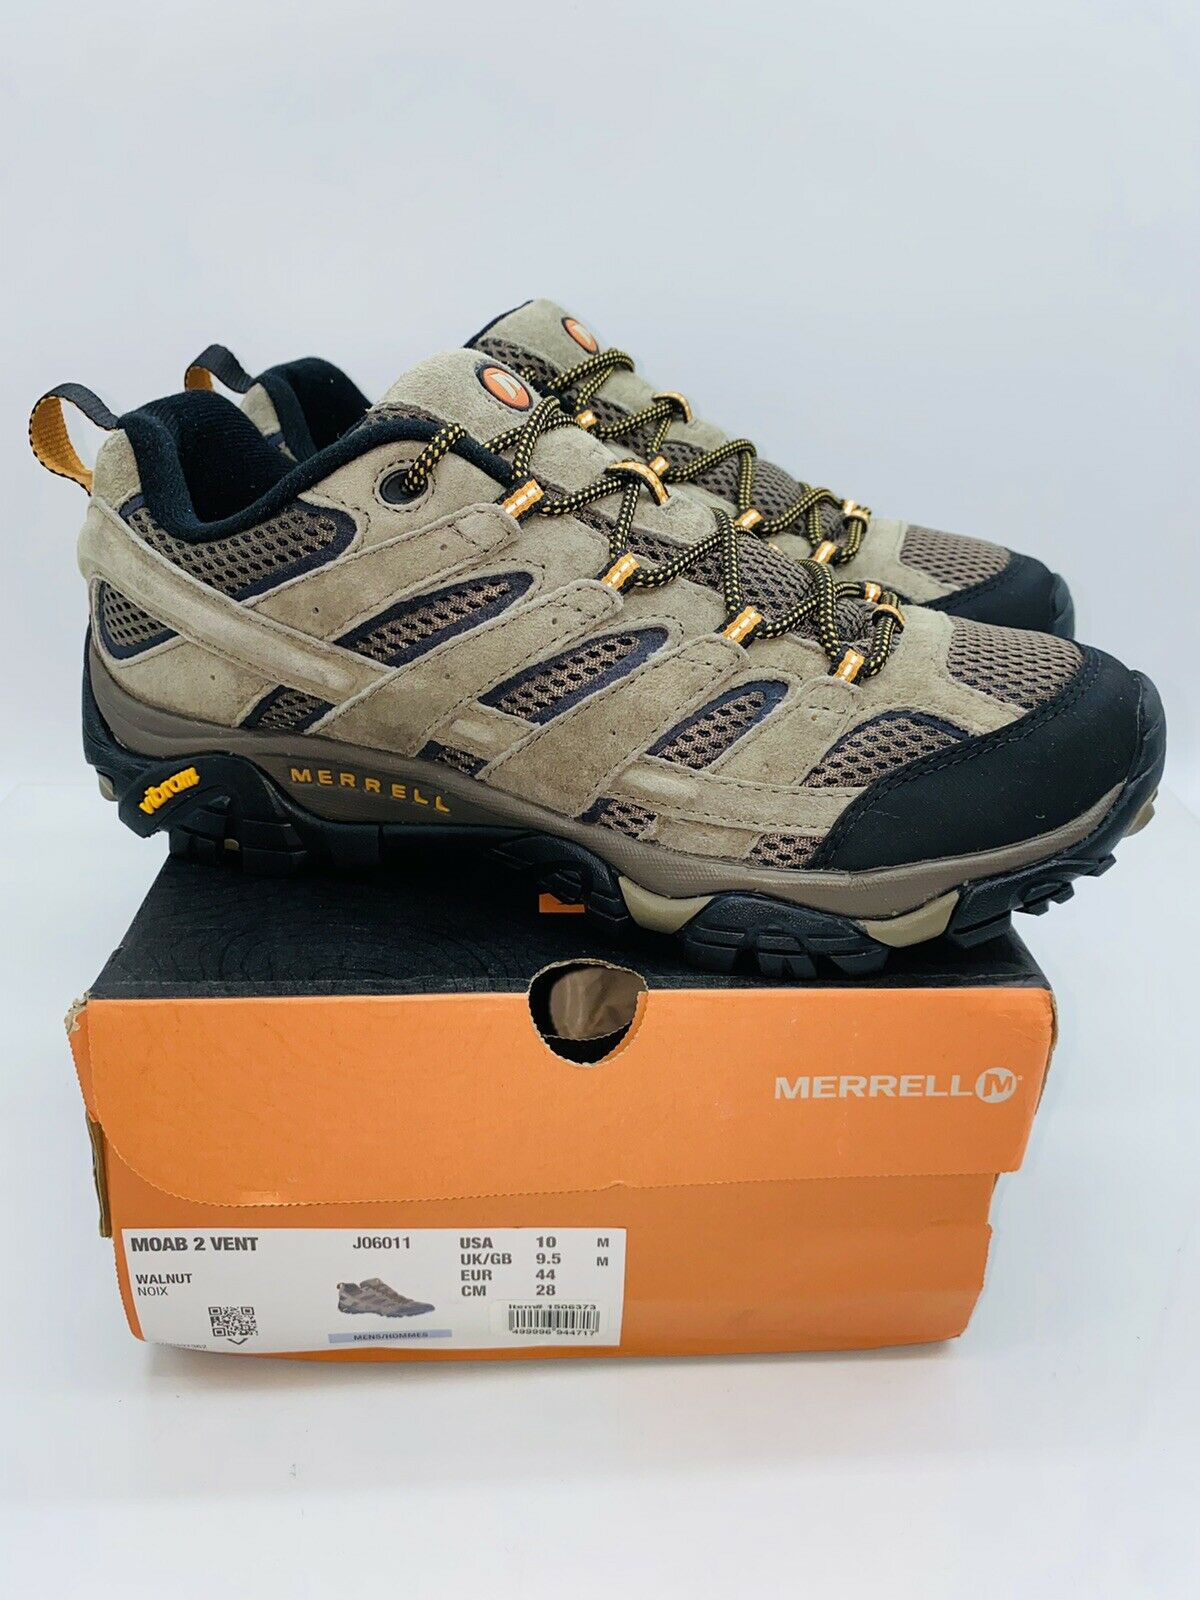 Merrell Men's Moab 2 Vent Hiking Sneaker Shoes - Walnut US 10M / EUR 44